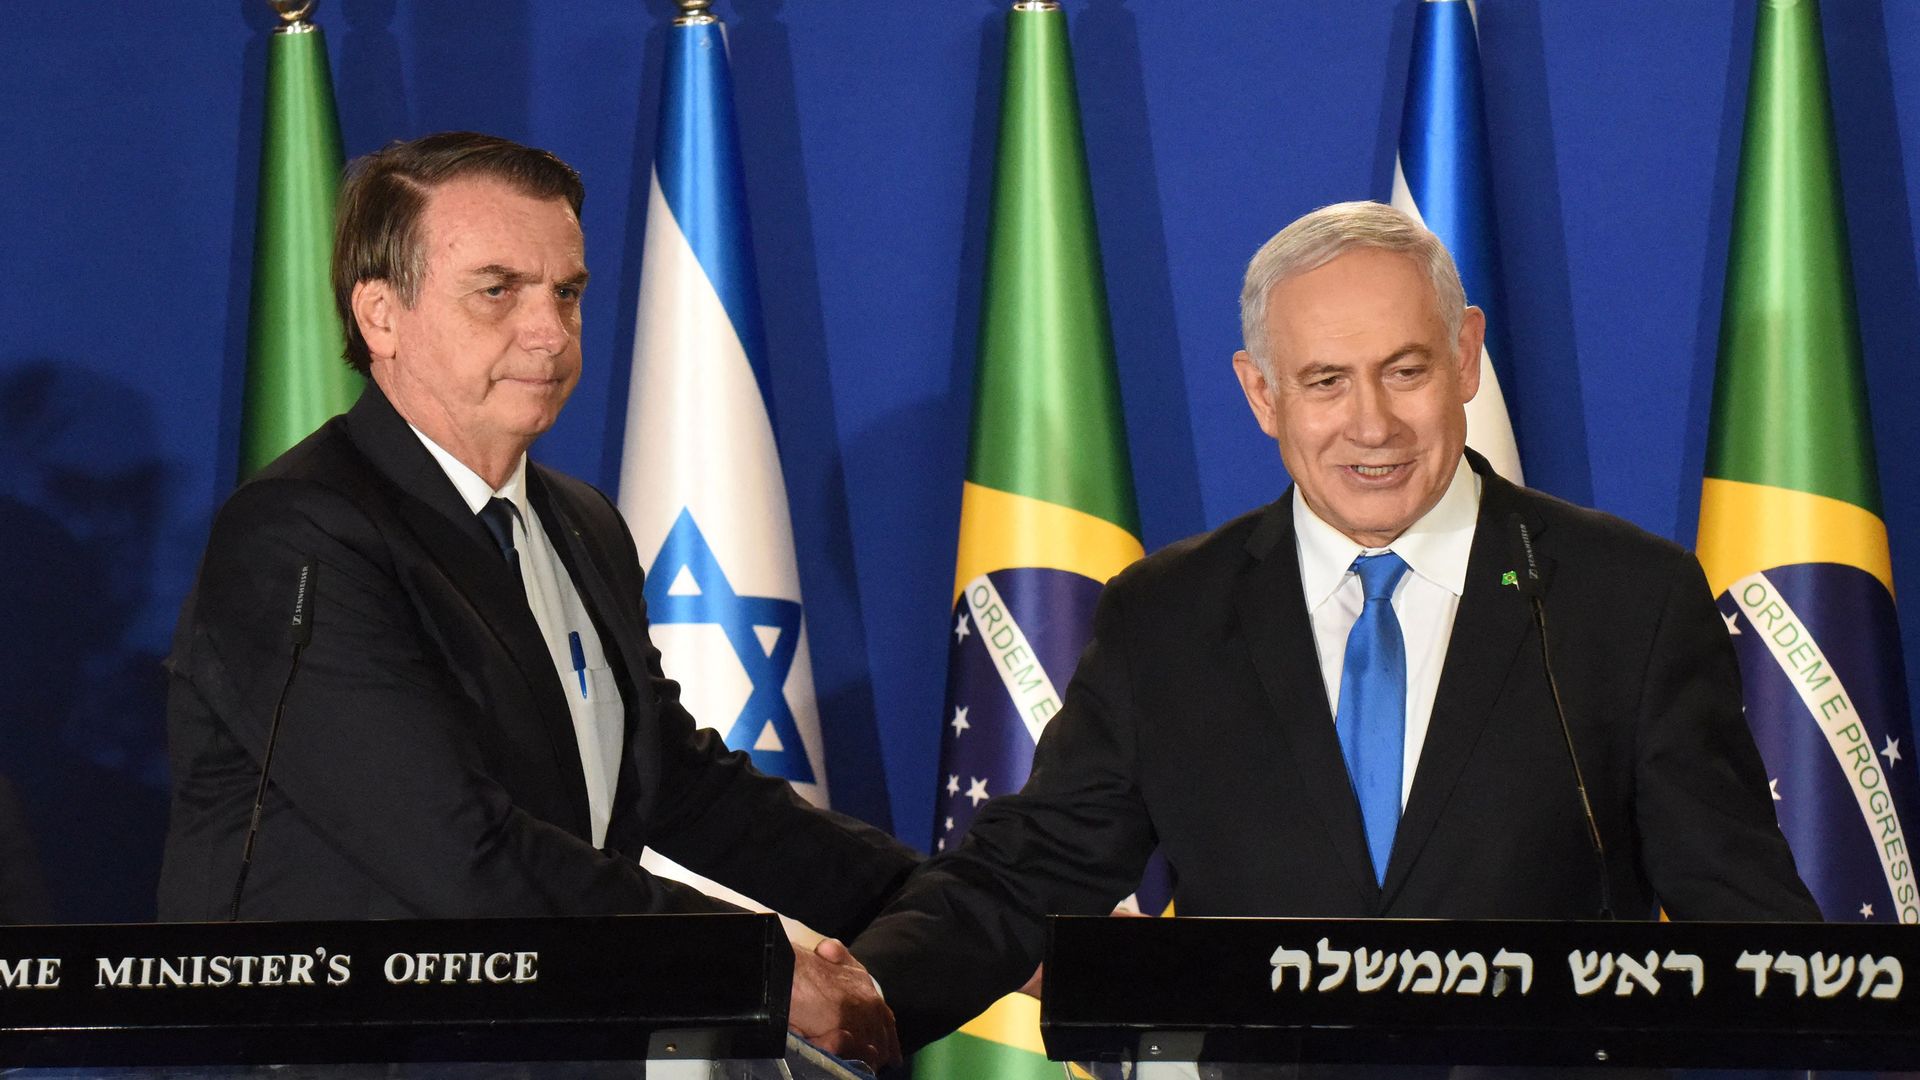 Bolsonaro and Netanyahu shake hands in Jerusalem in March 2019.